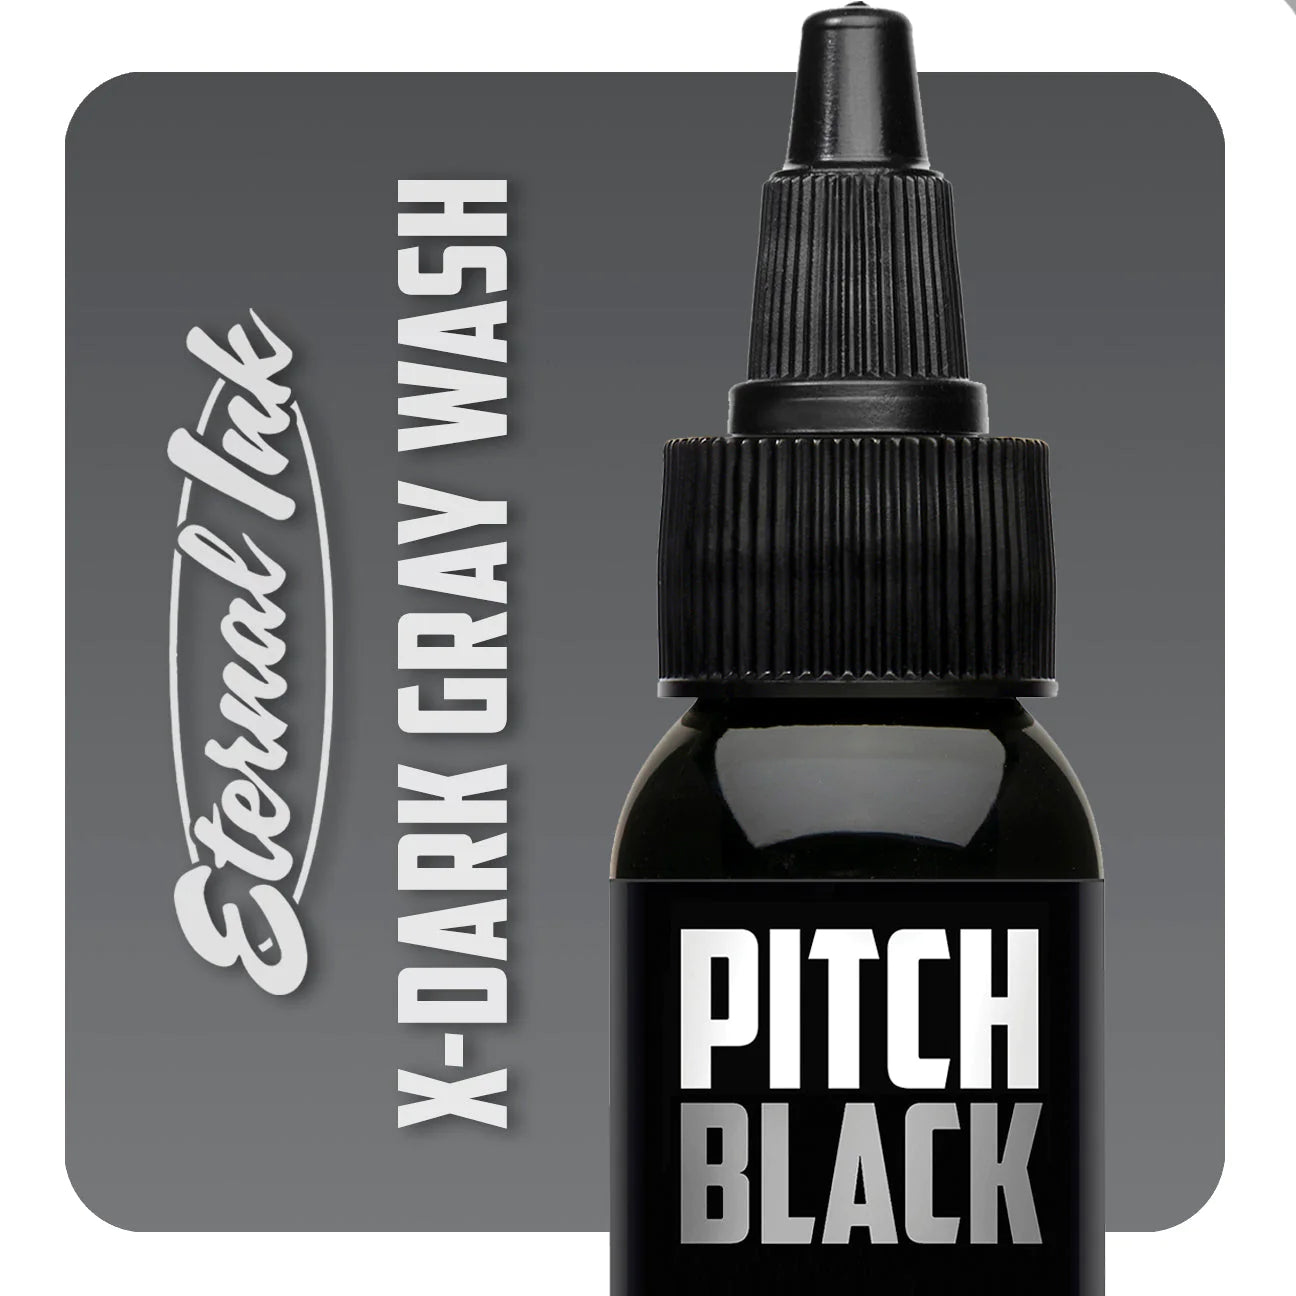 Pitch Black X-tra Dark Gray Wash — Eternal Ink — Pick Size